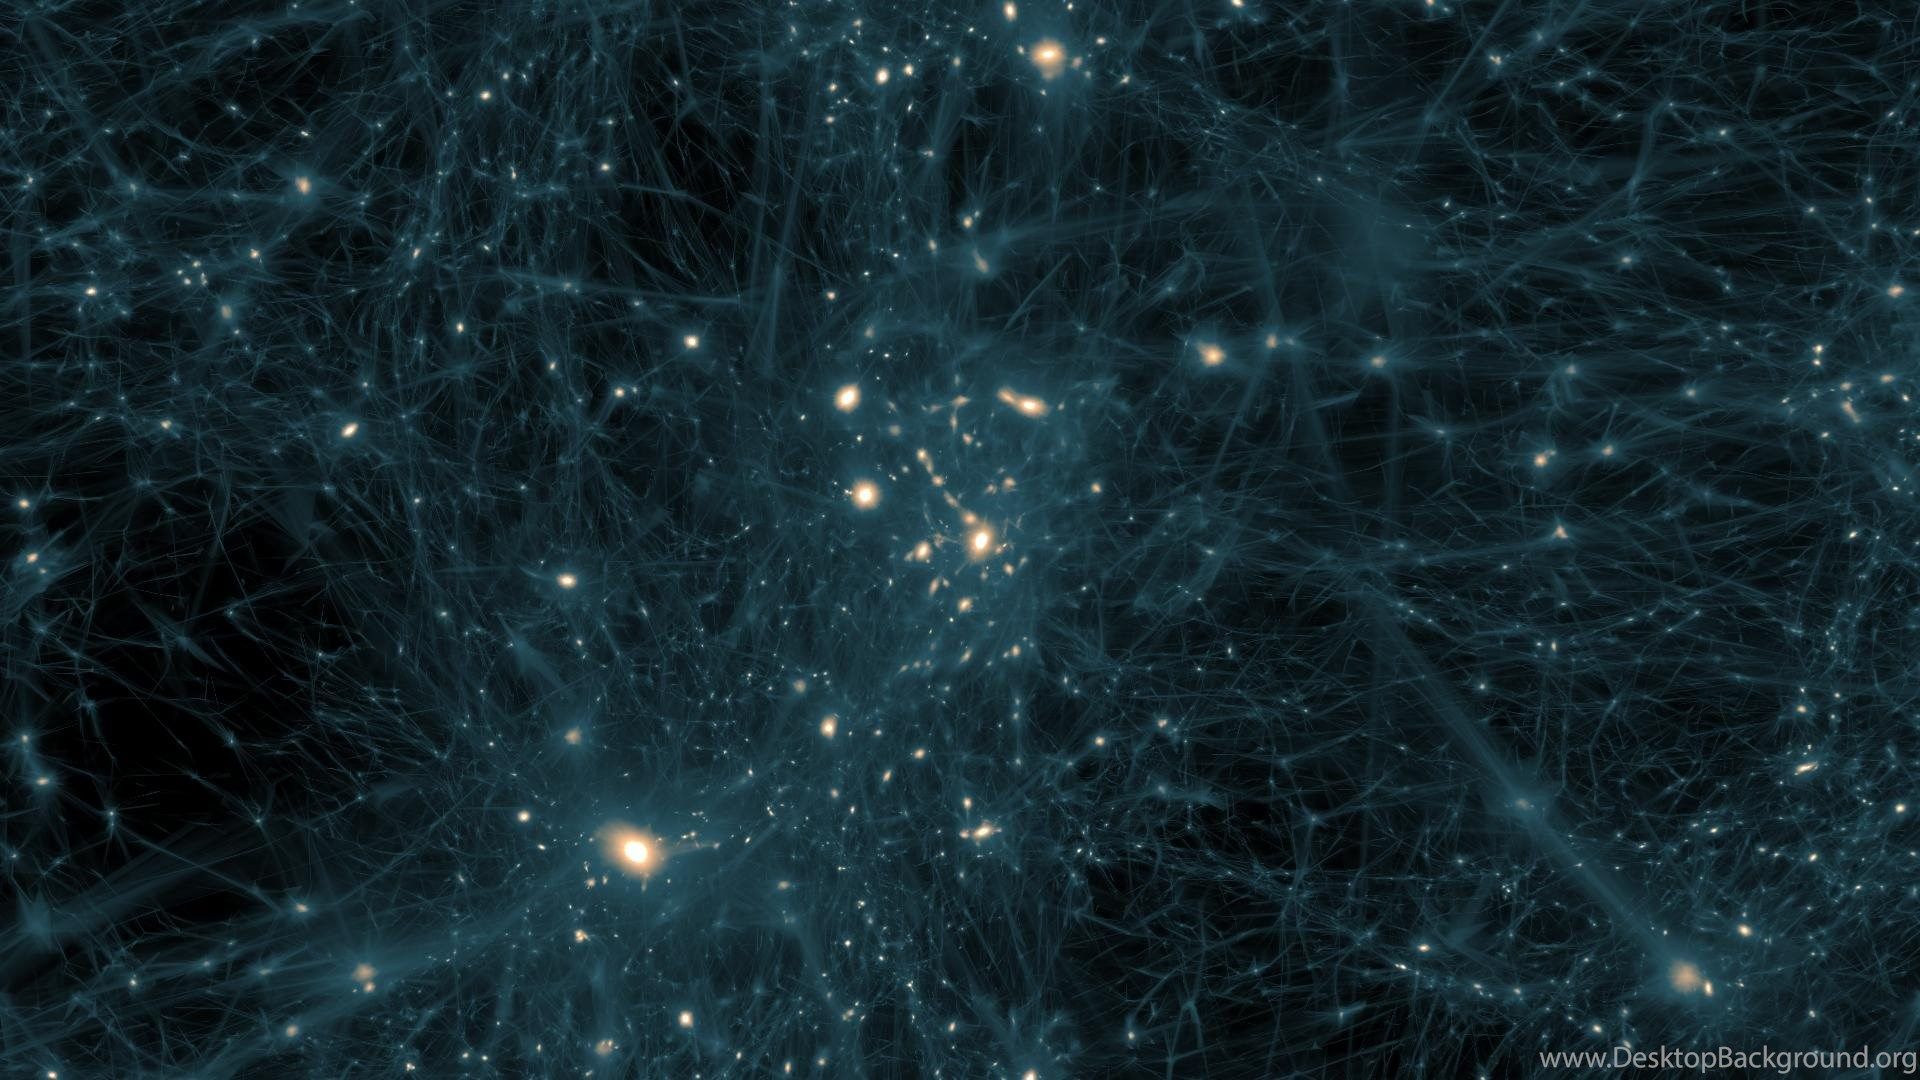 Wallpaper And Dark Matter Dark Energy Pics About Space Desktop Background